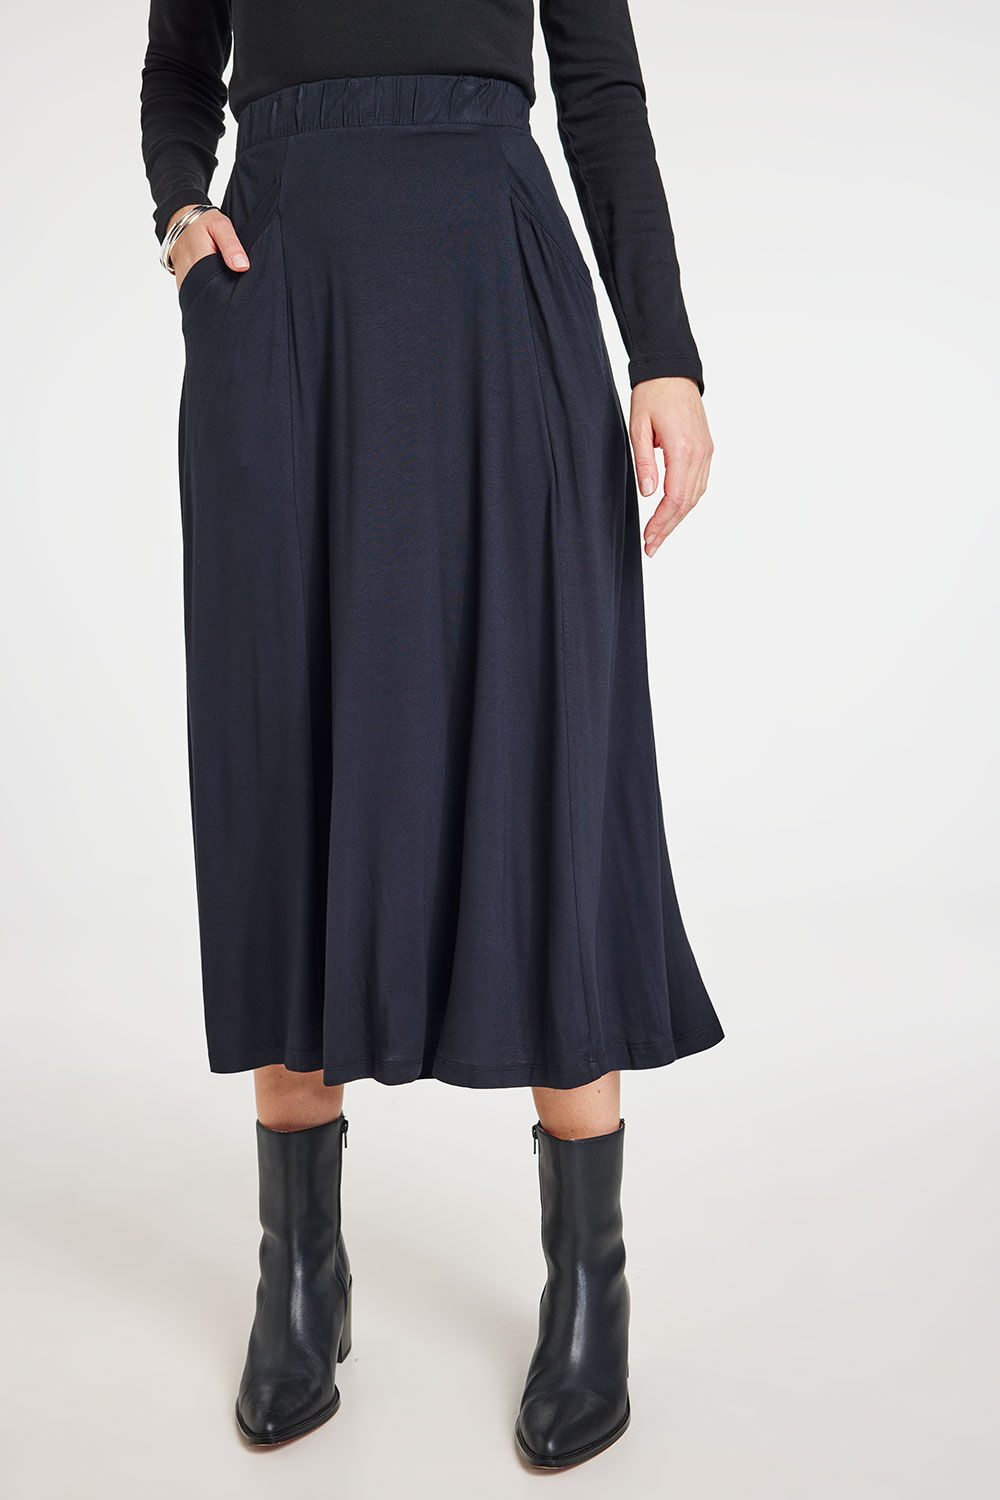 Bonmarche Black Plain Midi Jersey Skirt With Pocket Detail, Size: 10